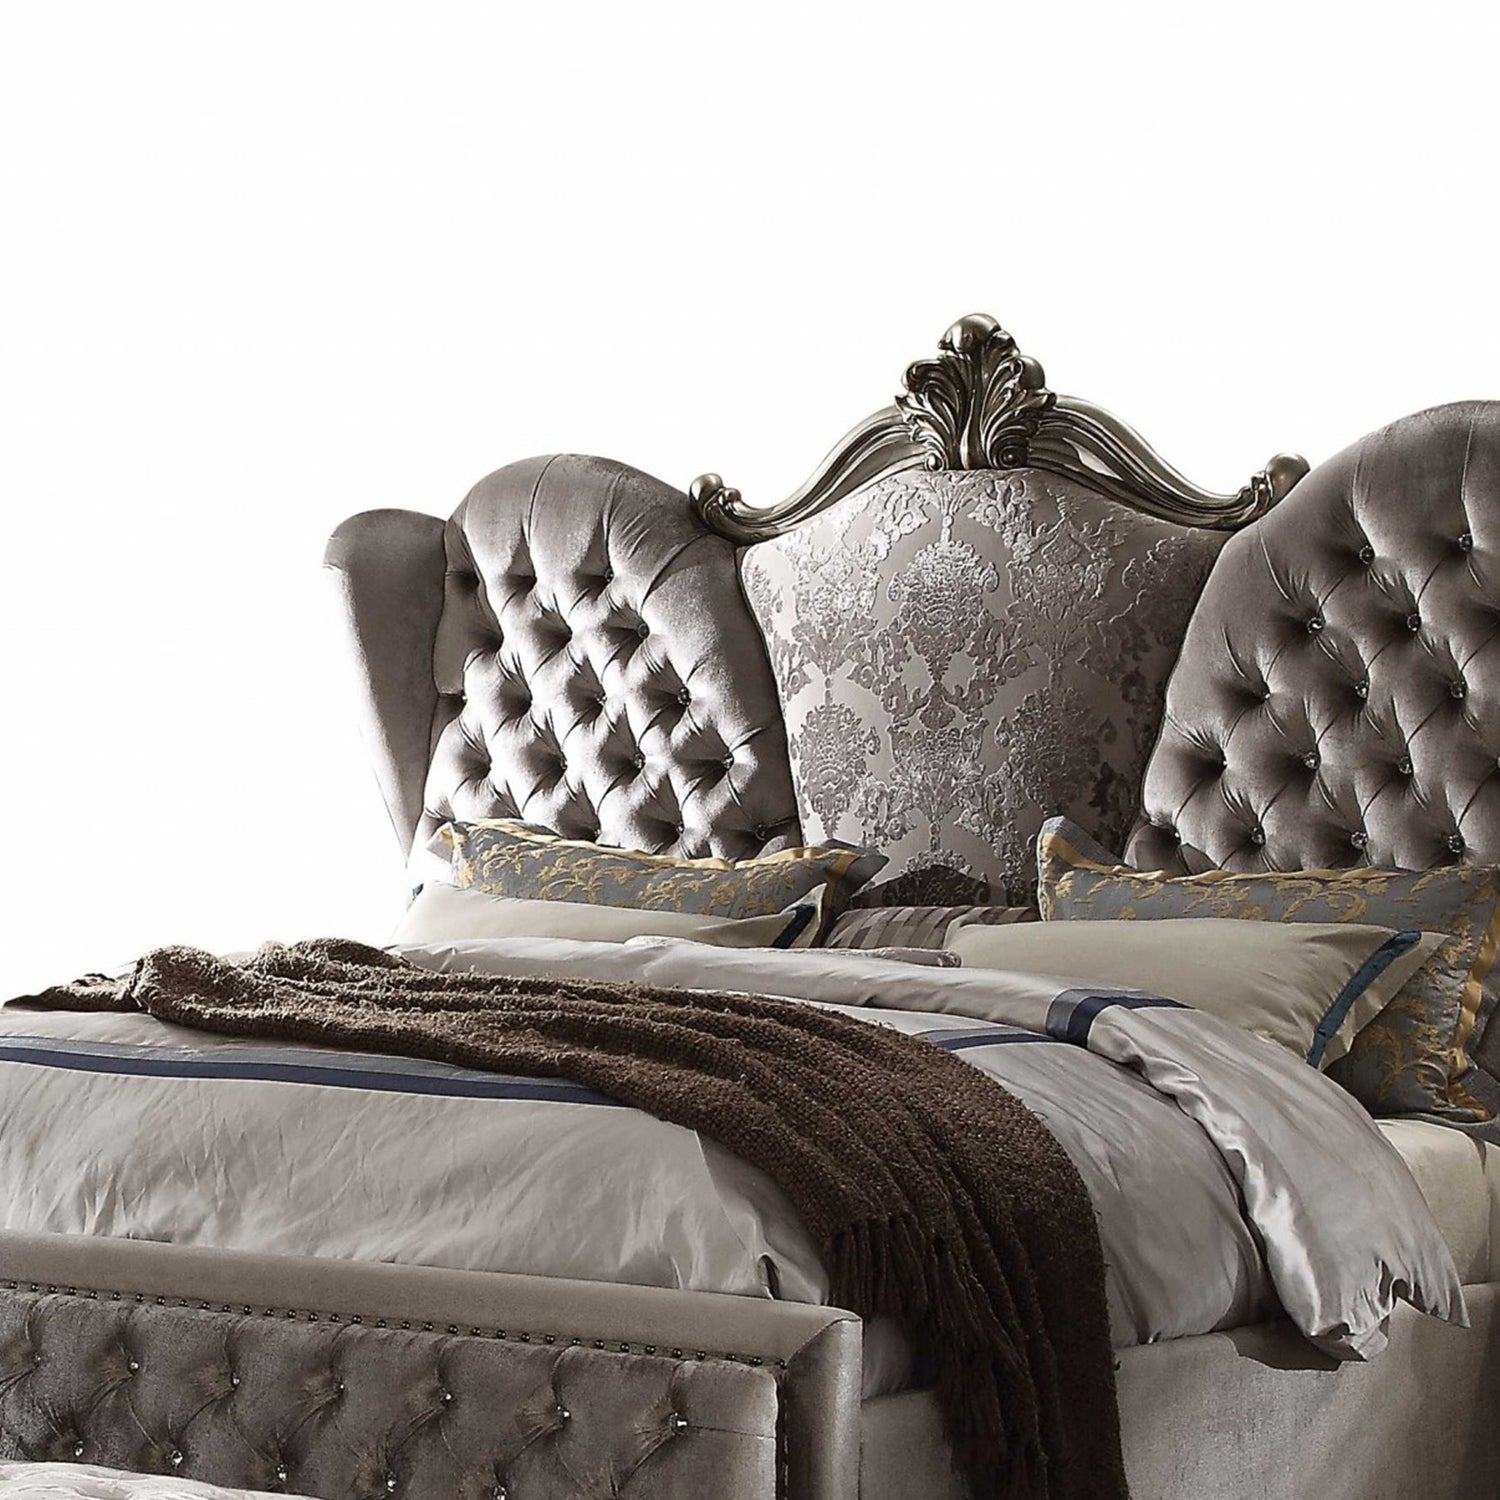 King Tufted Gray Upholstered Velvet Bed With Nailhead Trim